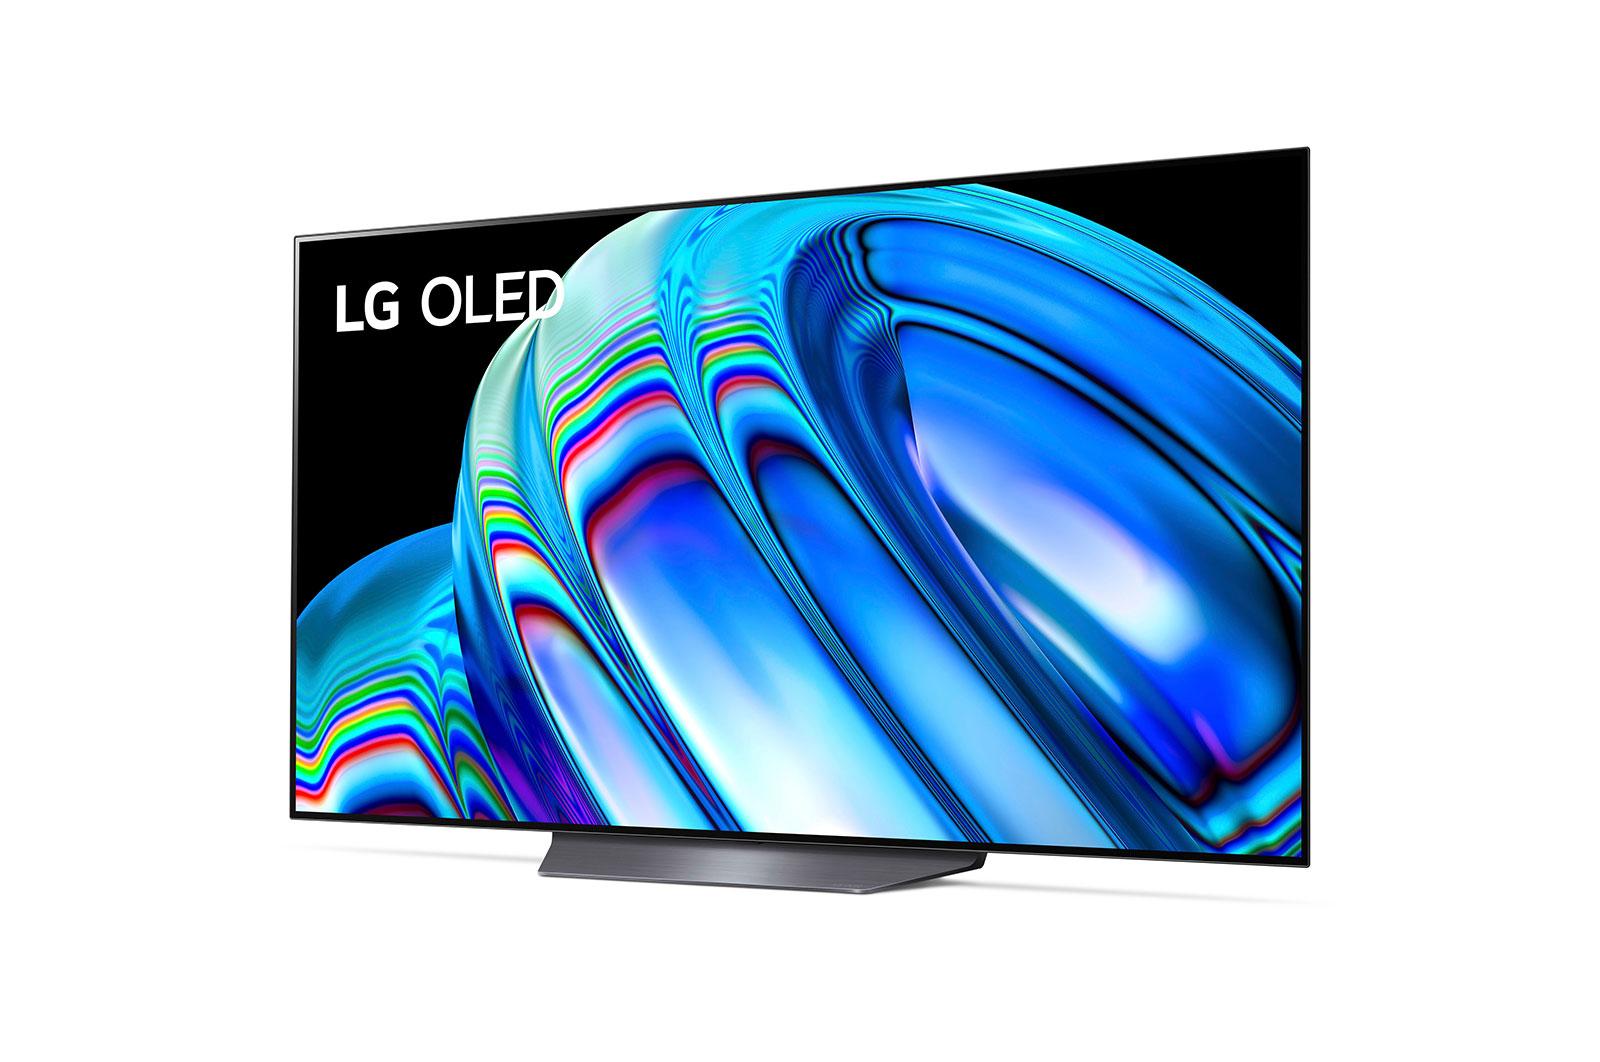  LG NANO75 Series 43-Inch Class Smart TV 43NANO75UQA - 2022  AI-Powered 4K, Alexa Built-In : Electronics